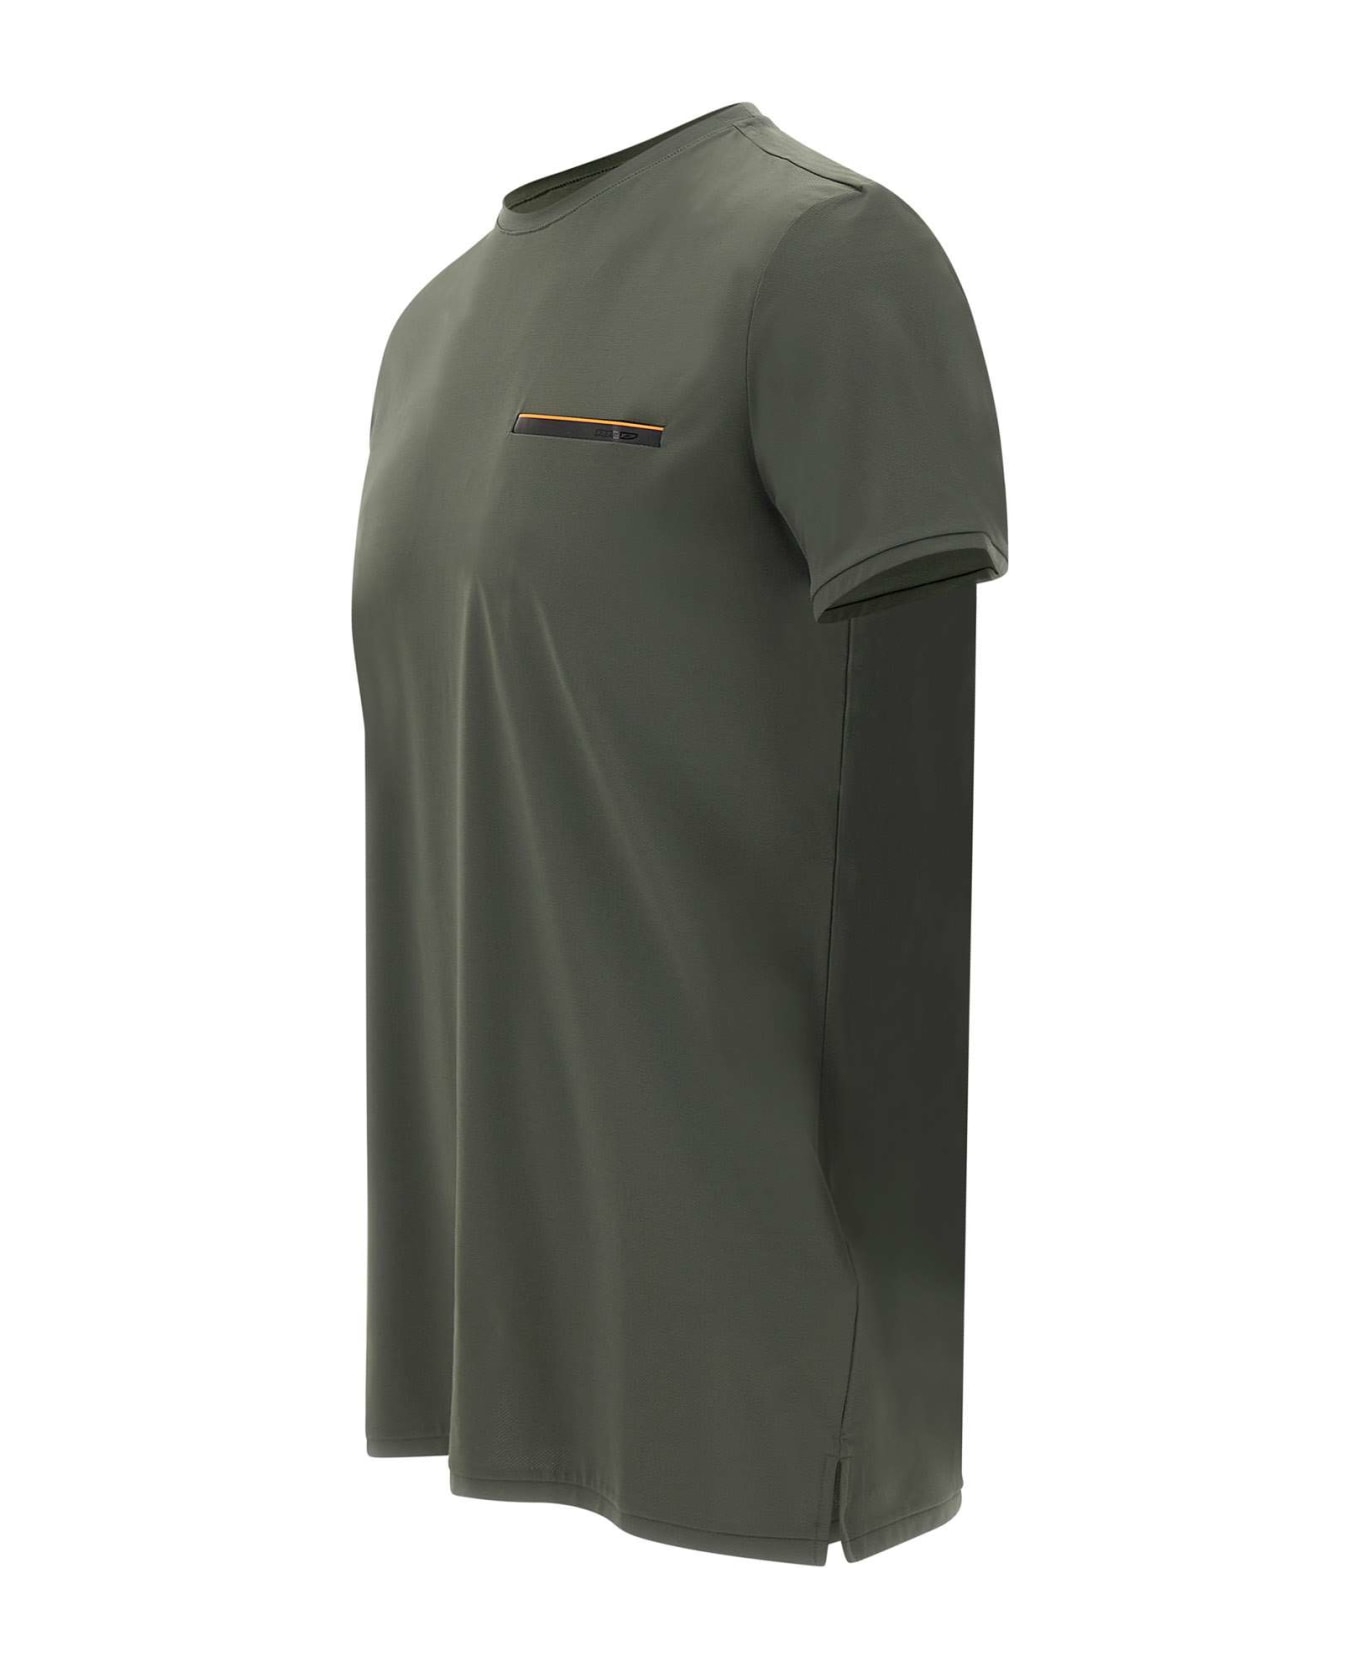 RRD - Roberto Ricci Design 'oxford Pocket Shirty' T-shirt